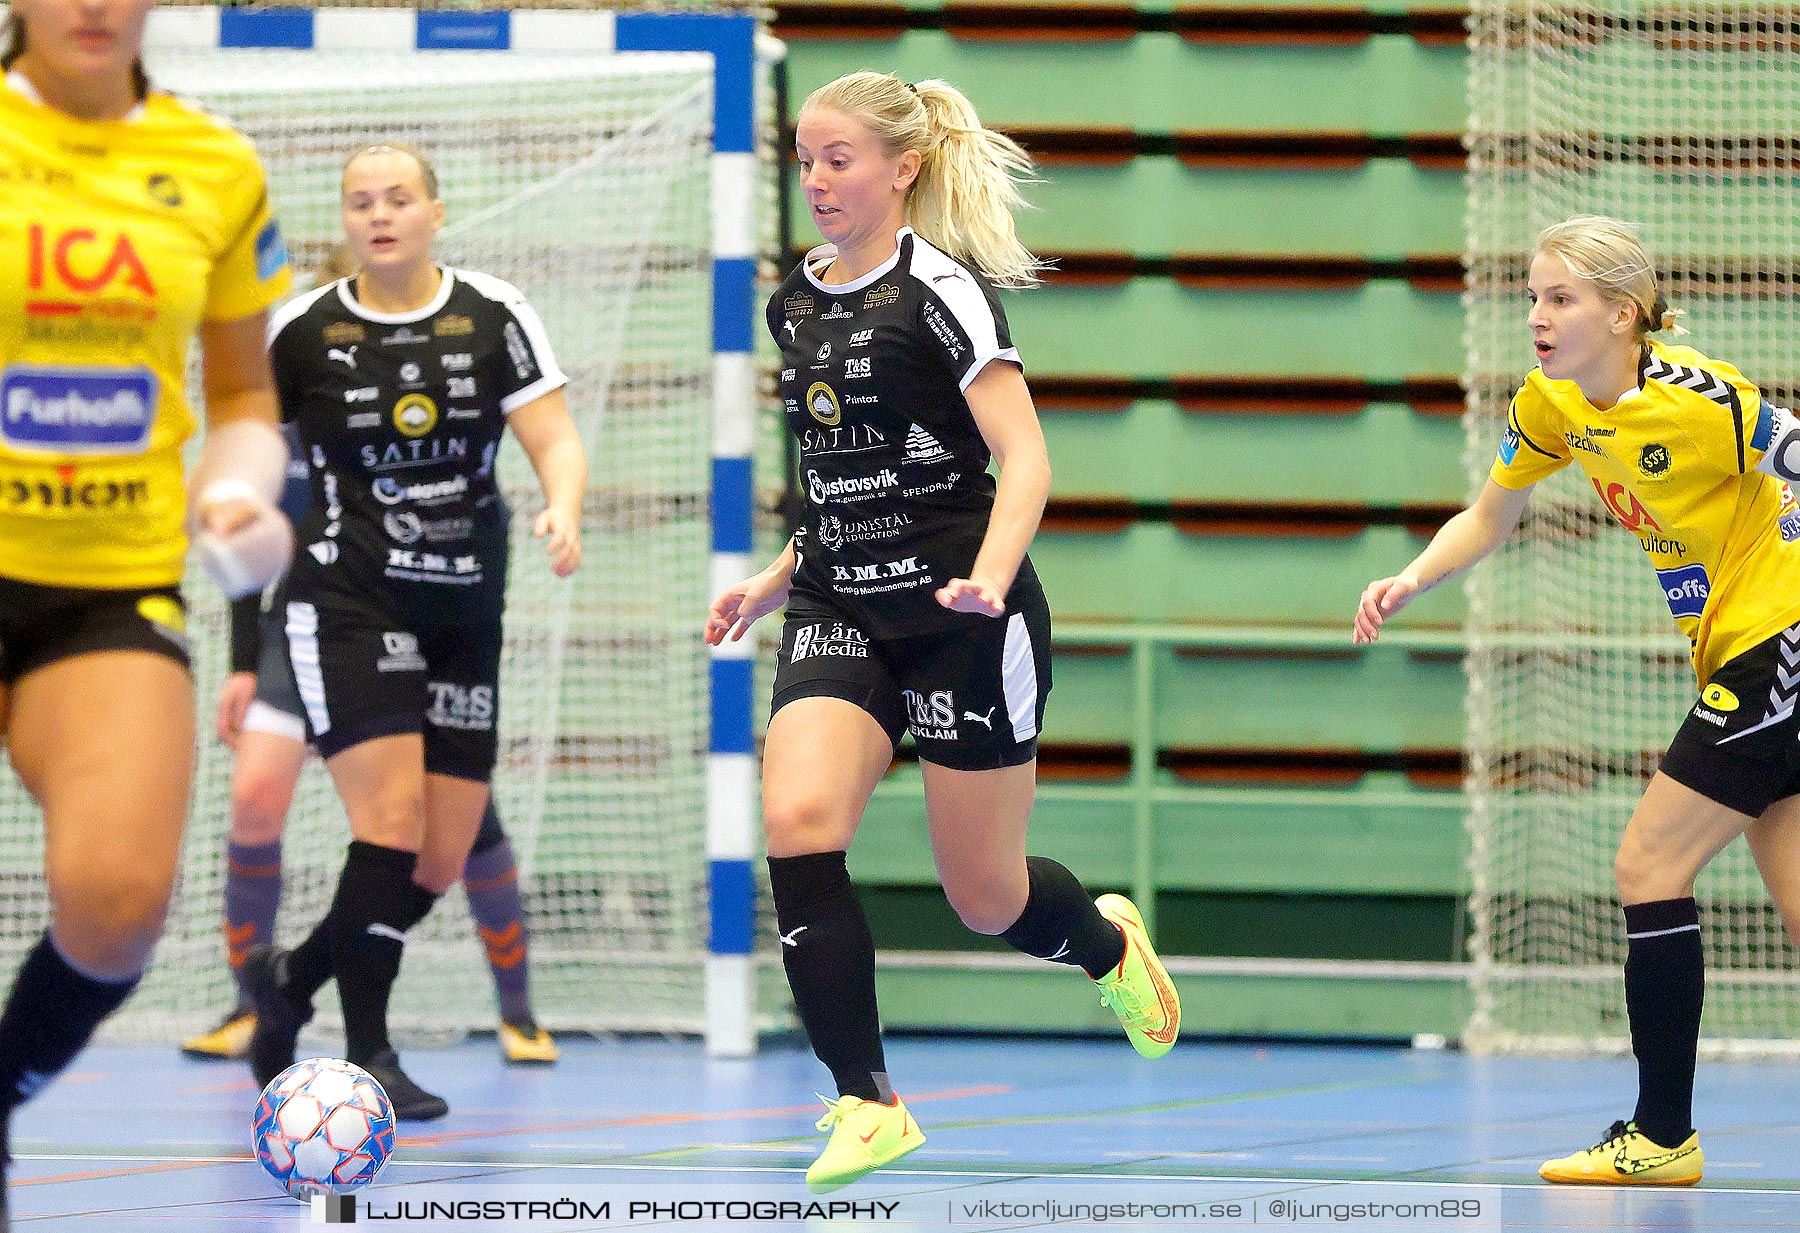 Skövde Futsalcup 2021 Damer Örebro Futsal Club-Skultorps IF 2,dam,Arena Skövde,Skövde,Sverige,Futsal,,2021,270512